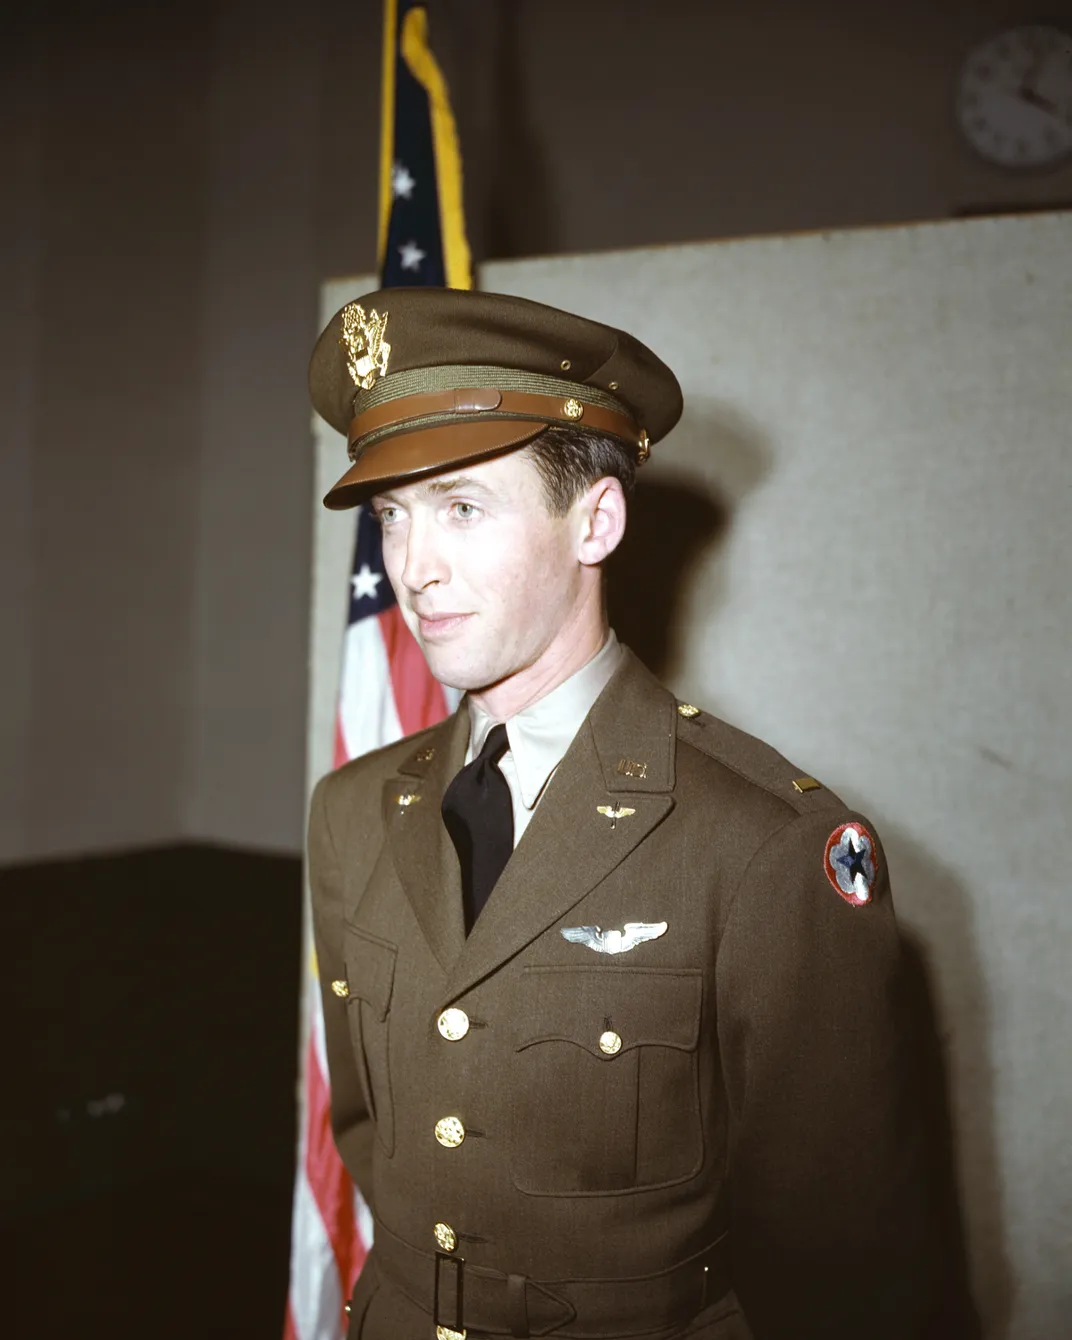 James Stewart in a United States Army Air Corps uniform, circa 1942